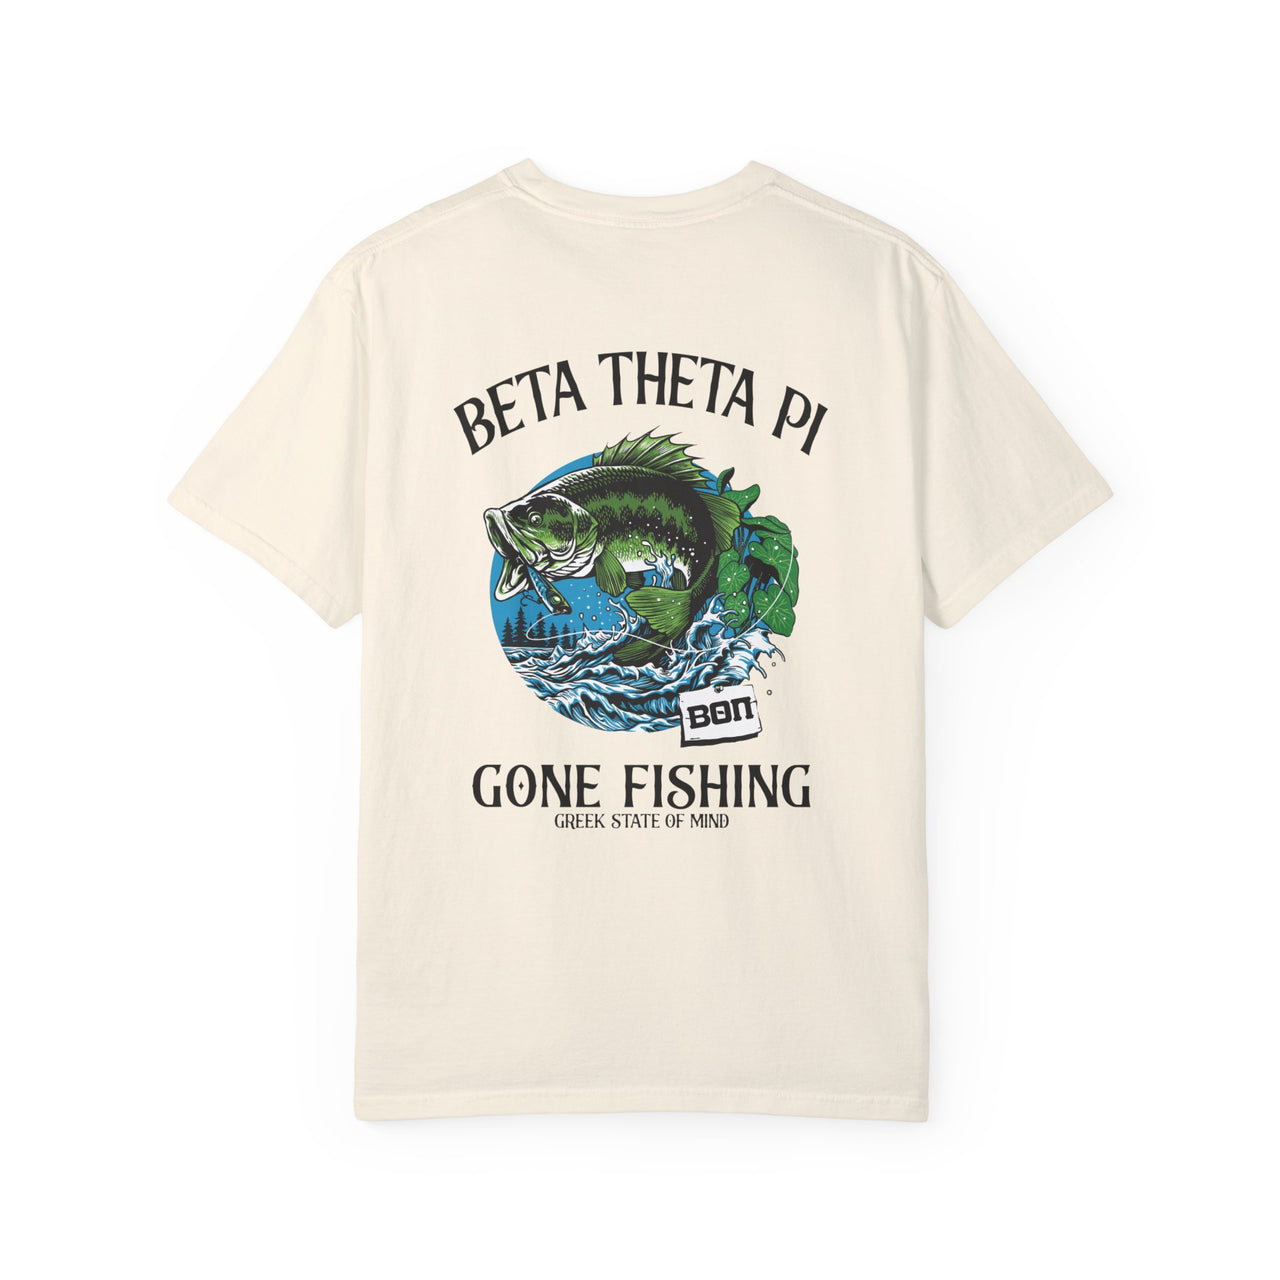 Beta Theta Pi Graphic T-Shirt | Gone Fishing